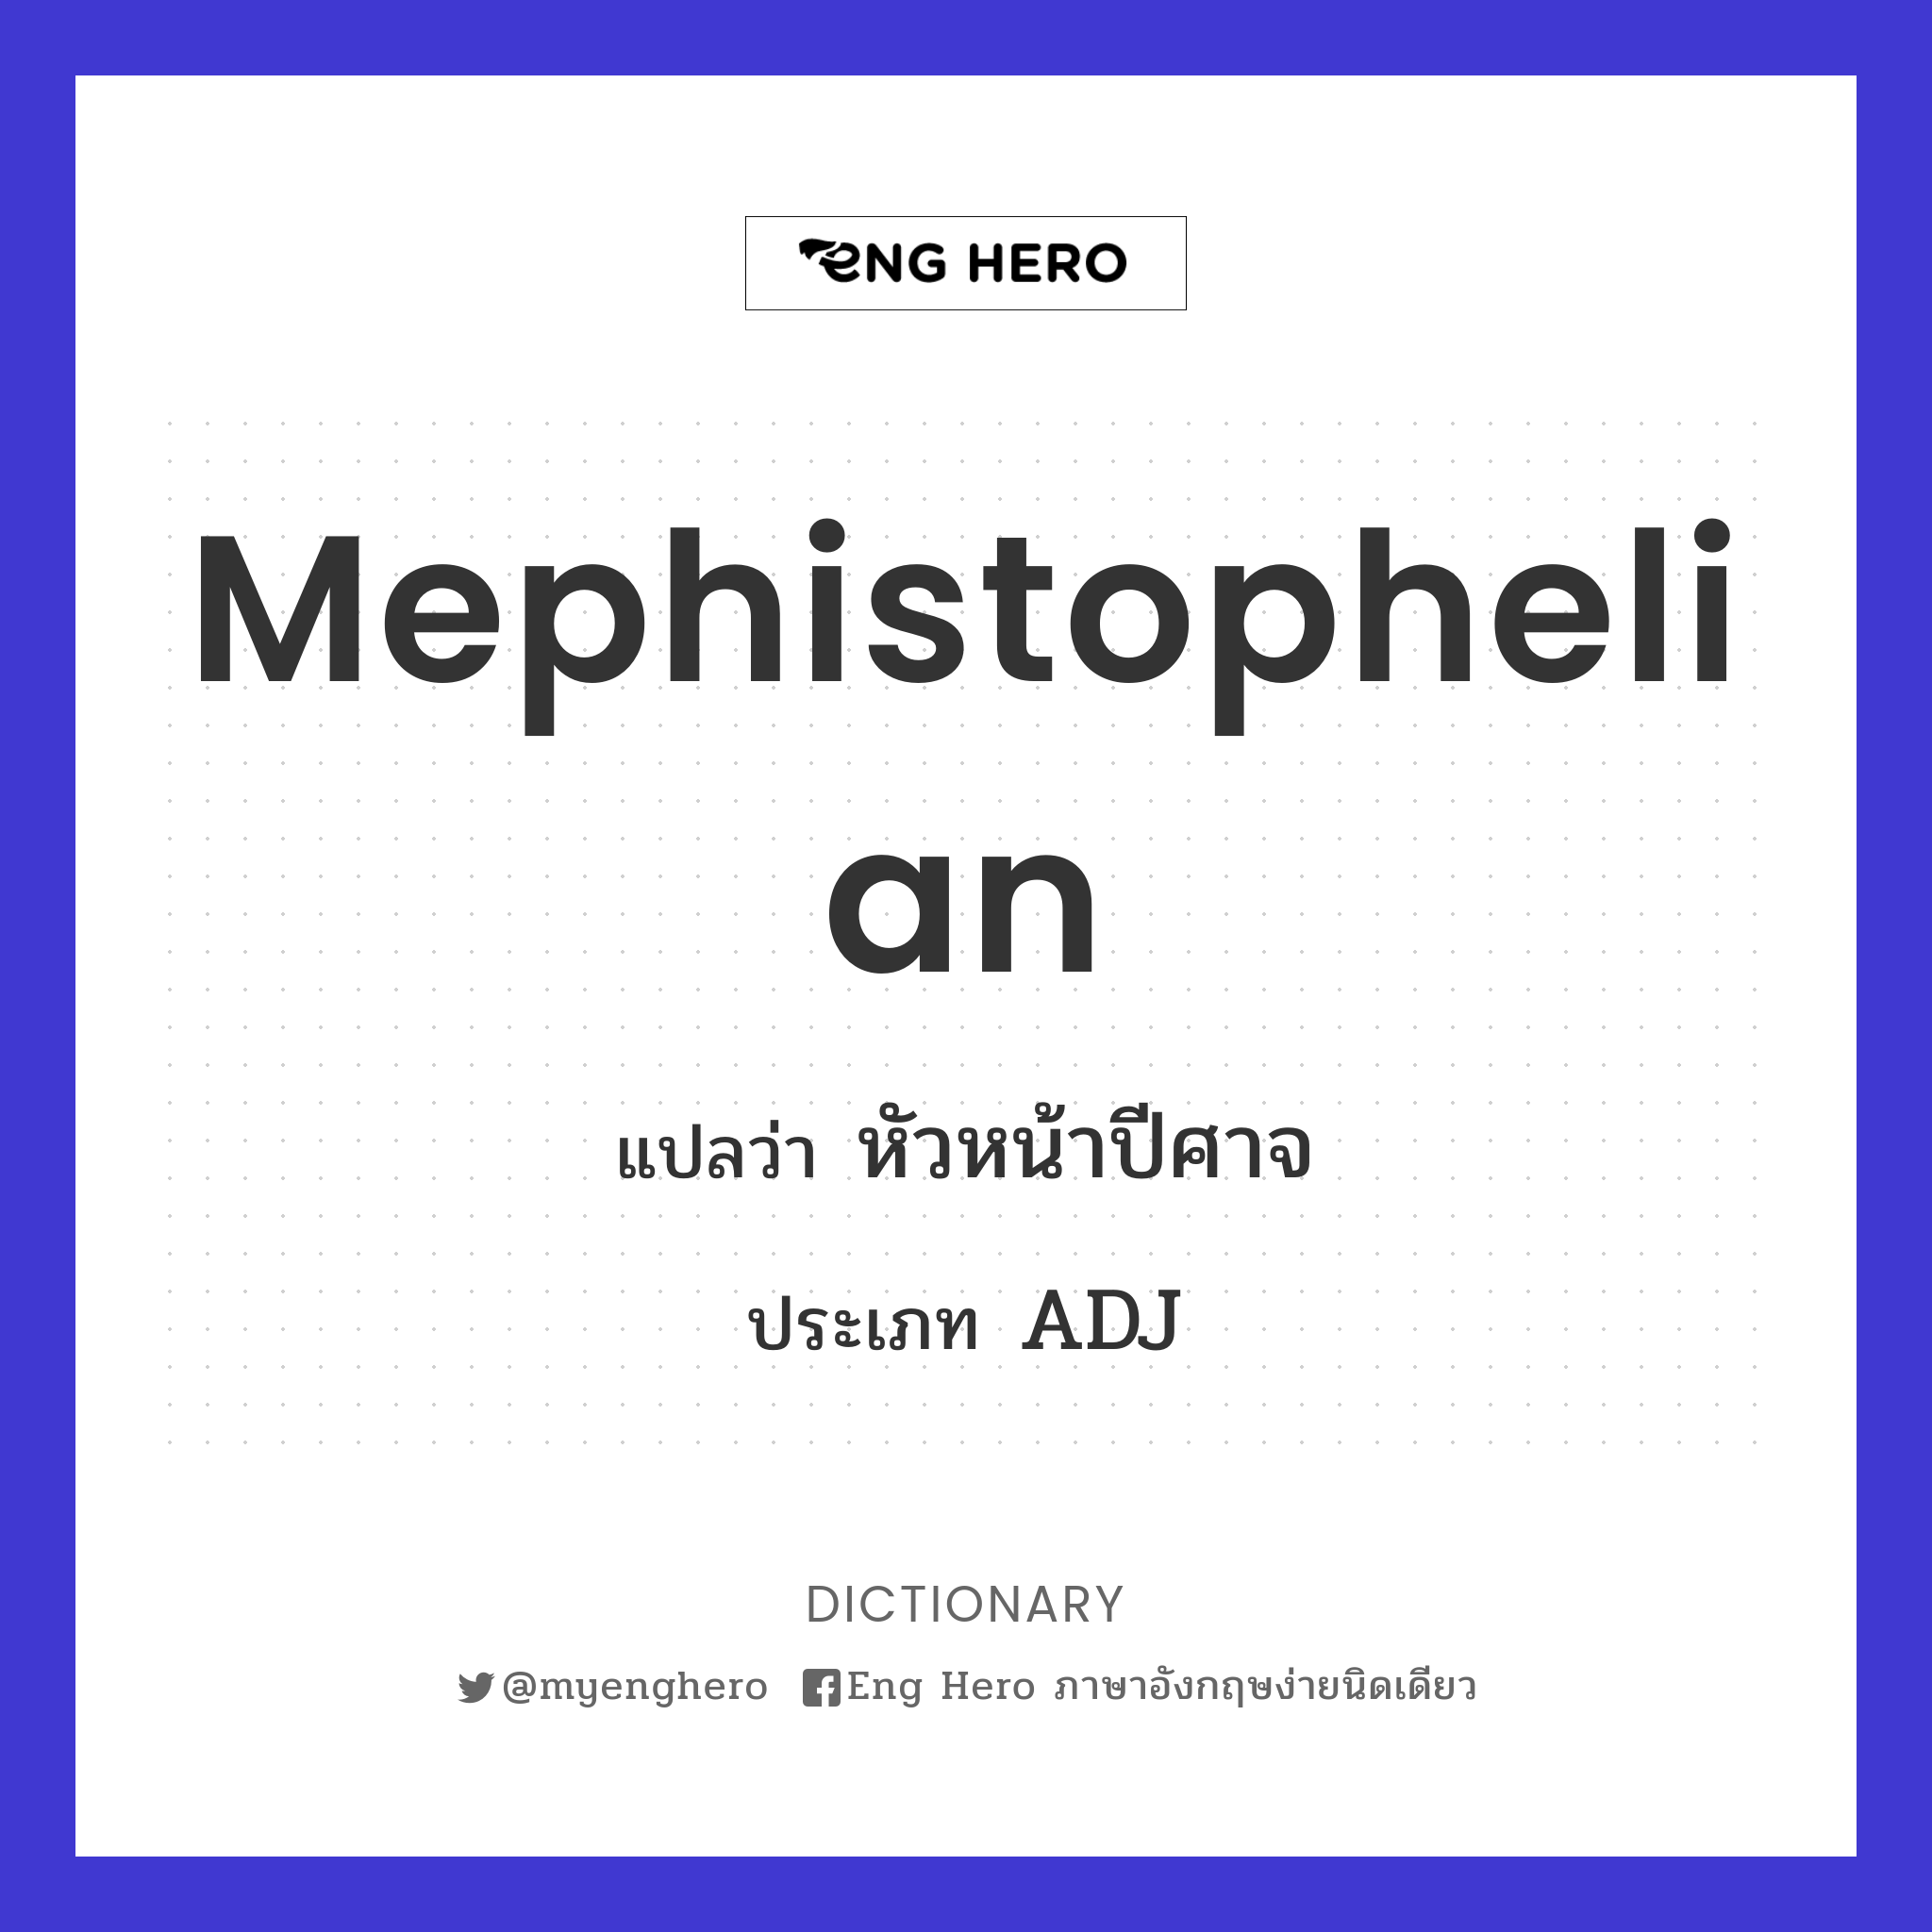 Mephistophelian